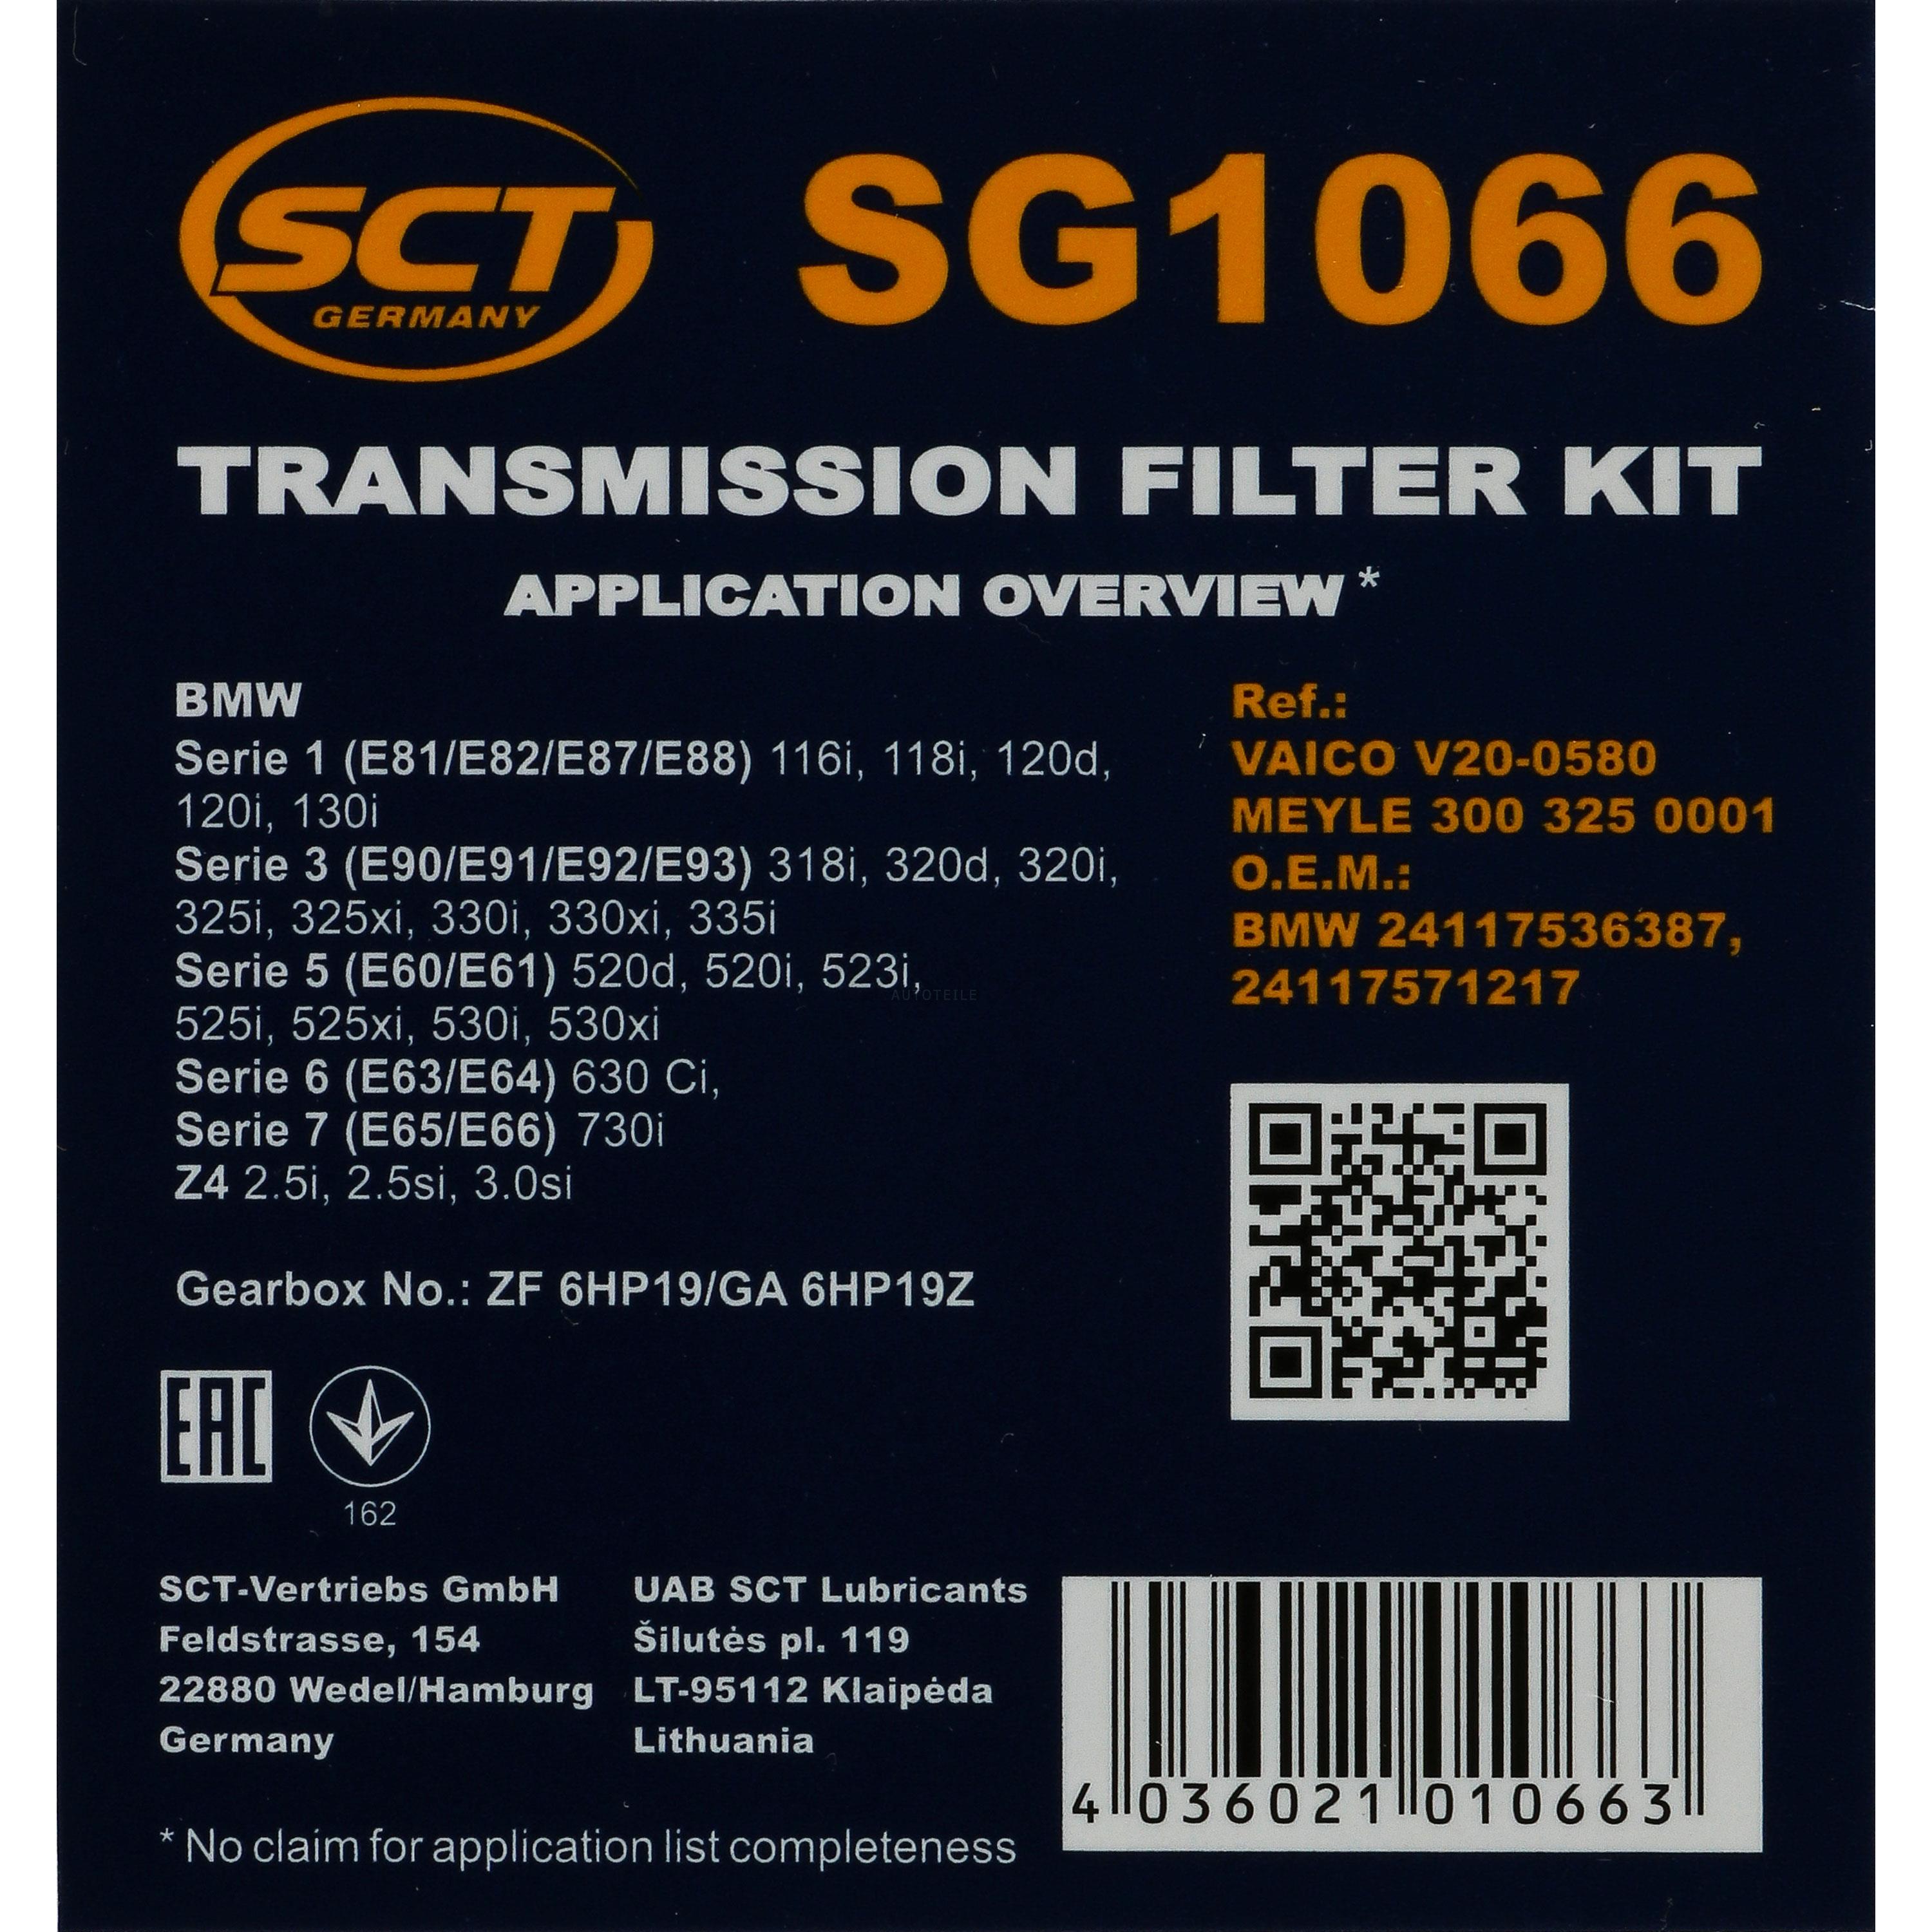 SCT Getriebeölfilter SG 1066 für Automatikgetriebe Ölfilter